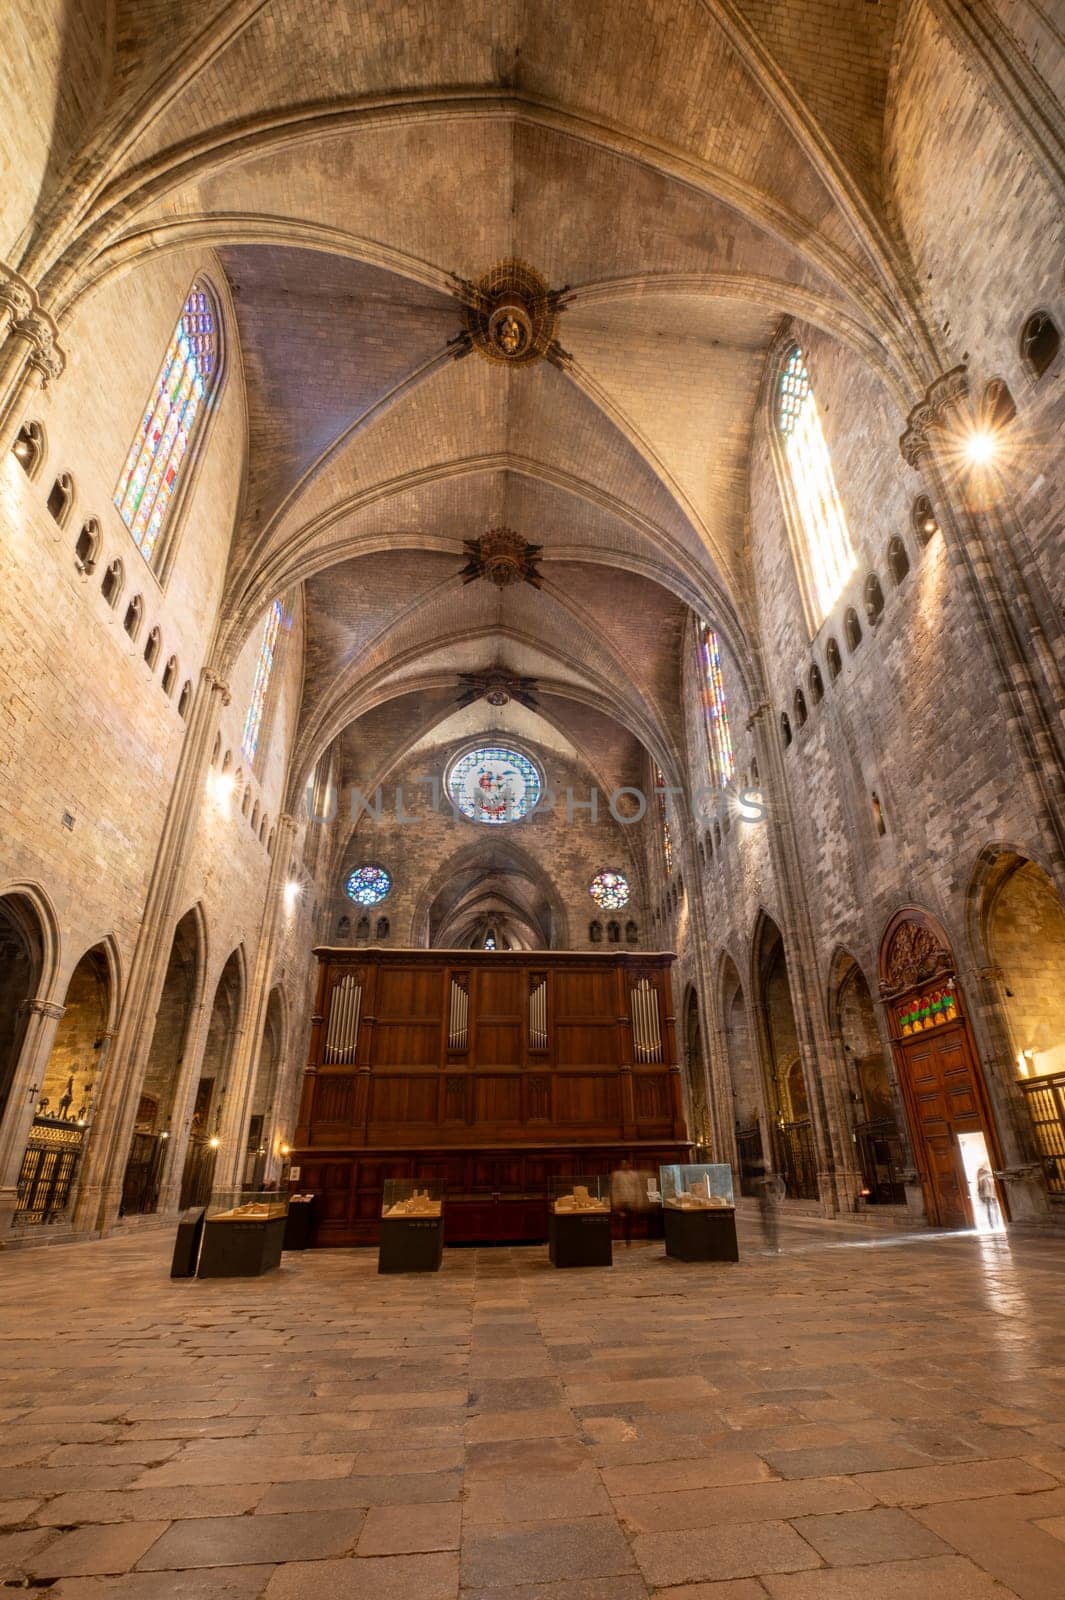  Cathedral of Santa María of Ginona, Spain by martinscphoto